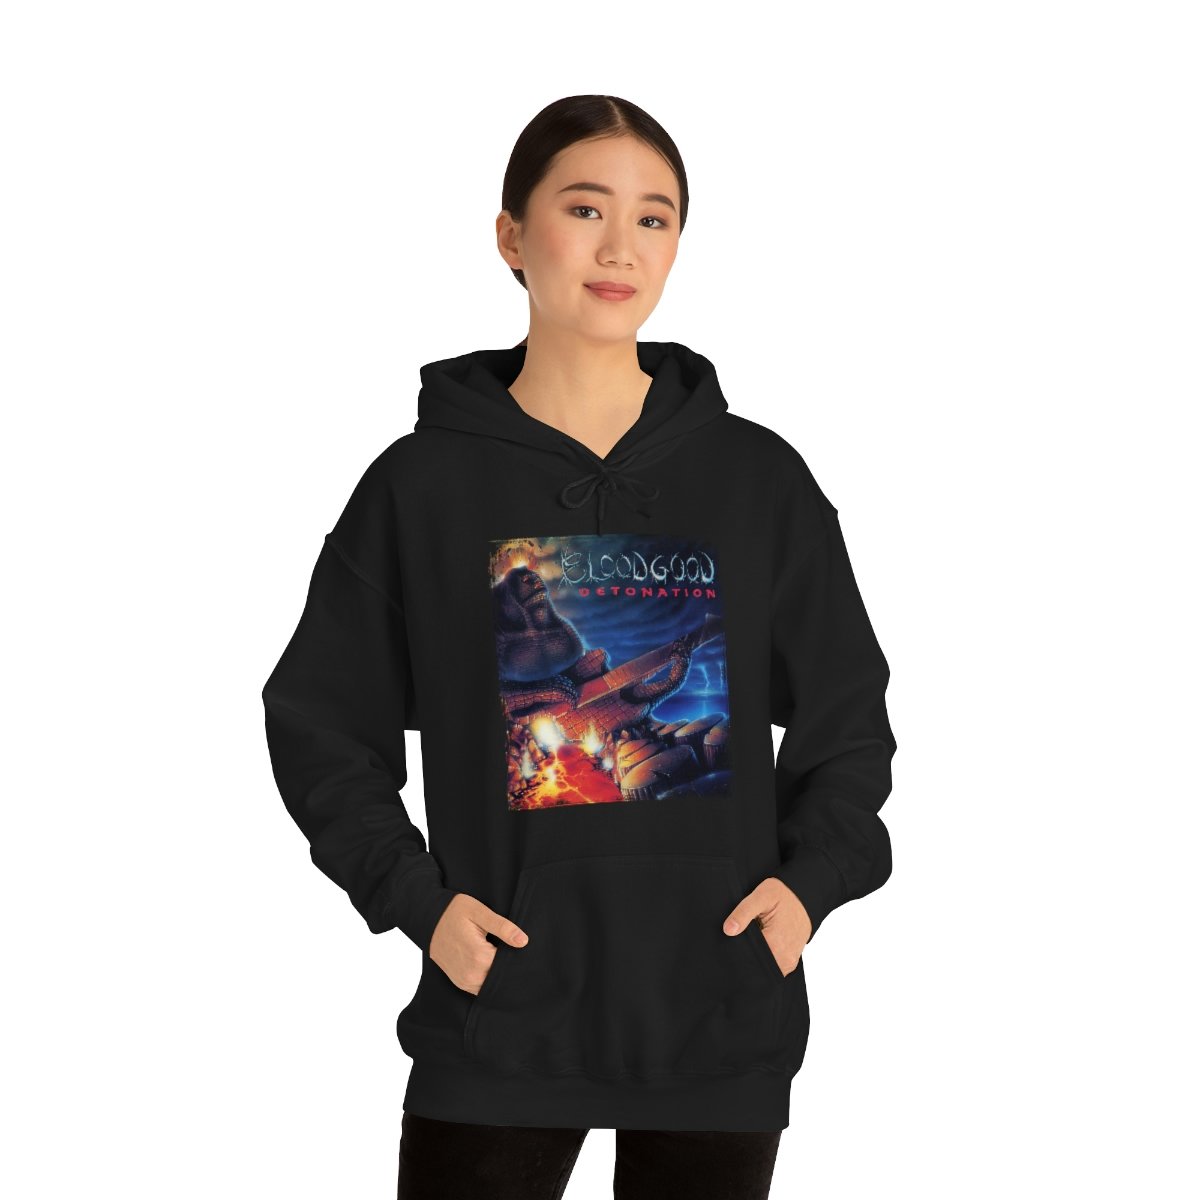 Bloodgood – Detonation Pullover Hooded Sweatshirt